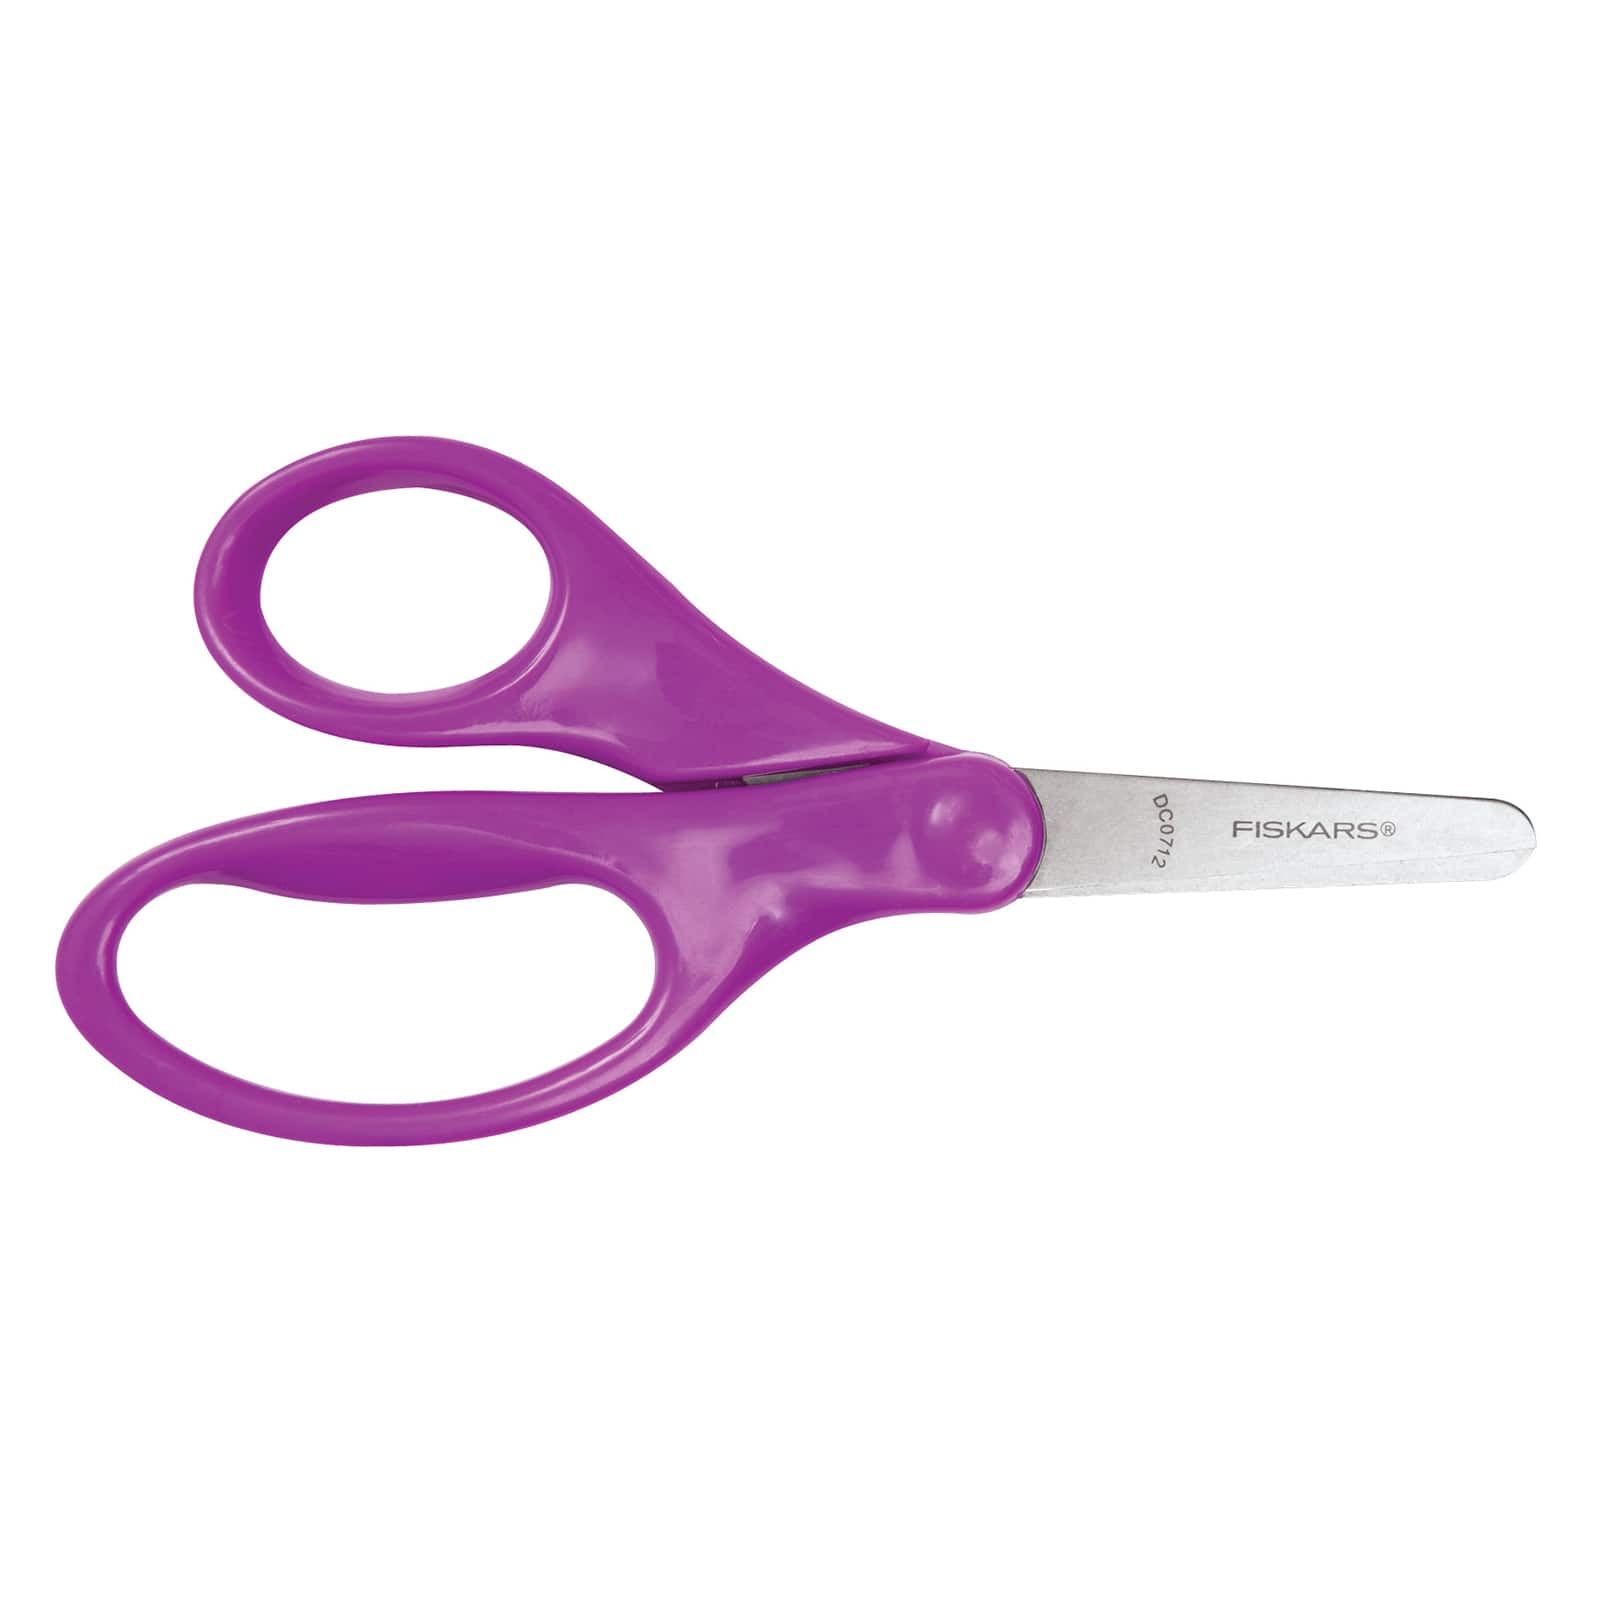 Wholesale Blunt Tip Kids Scissors by Fiskars Discounts on